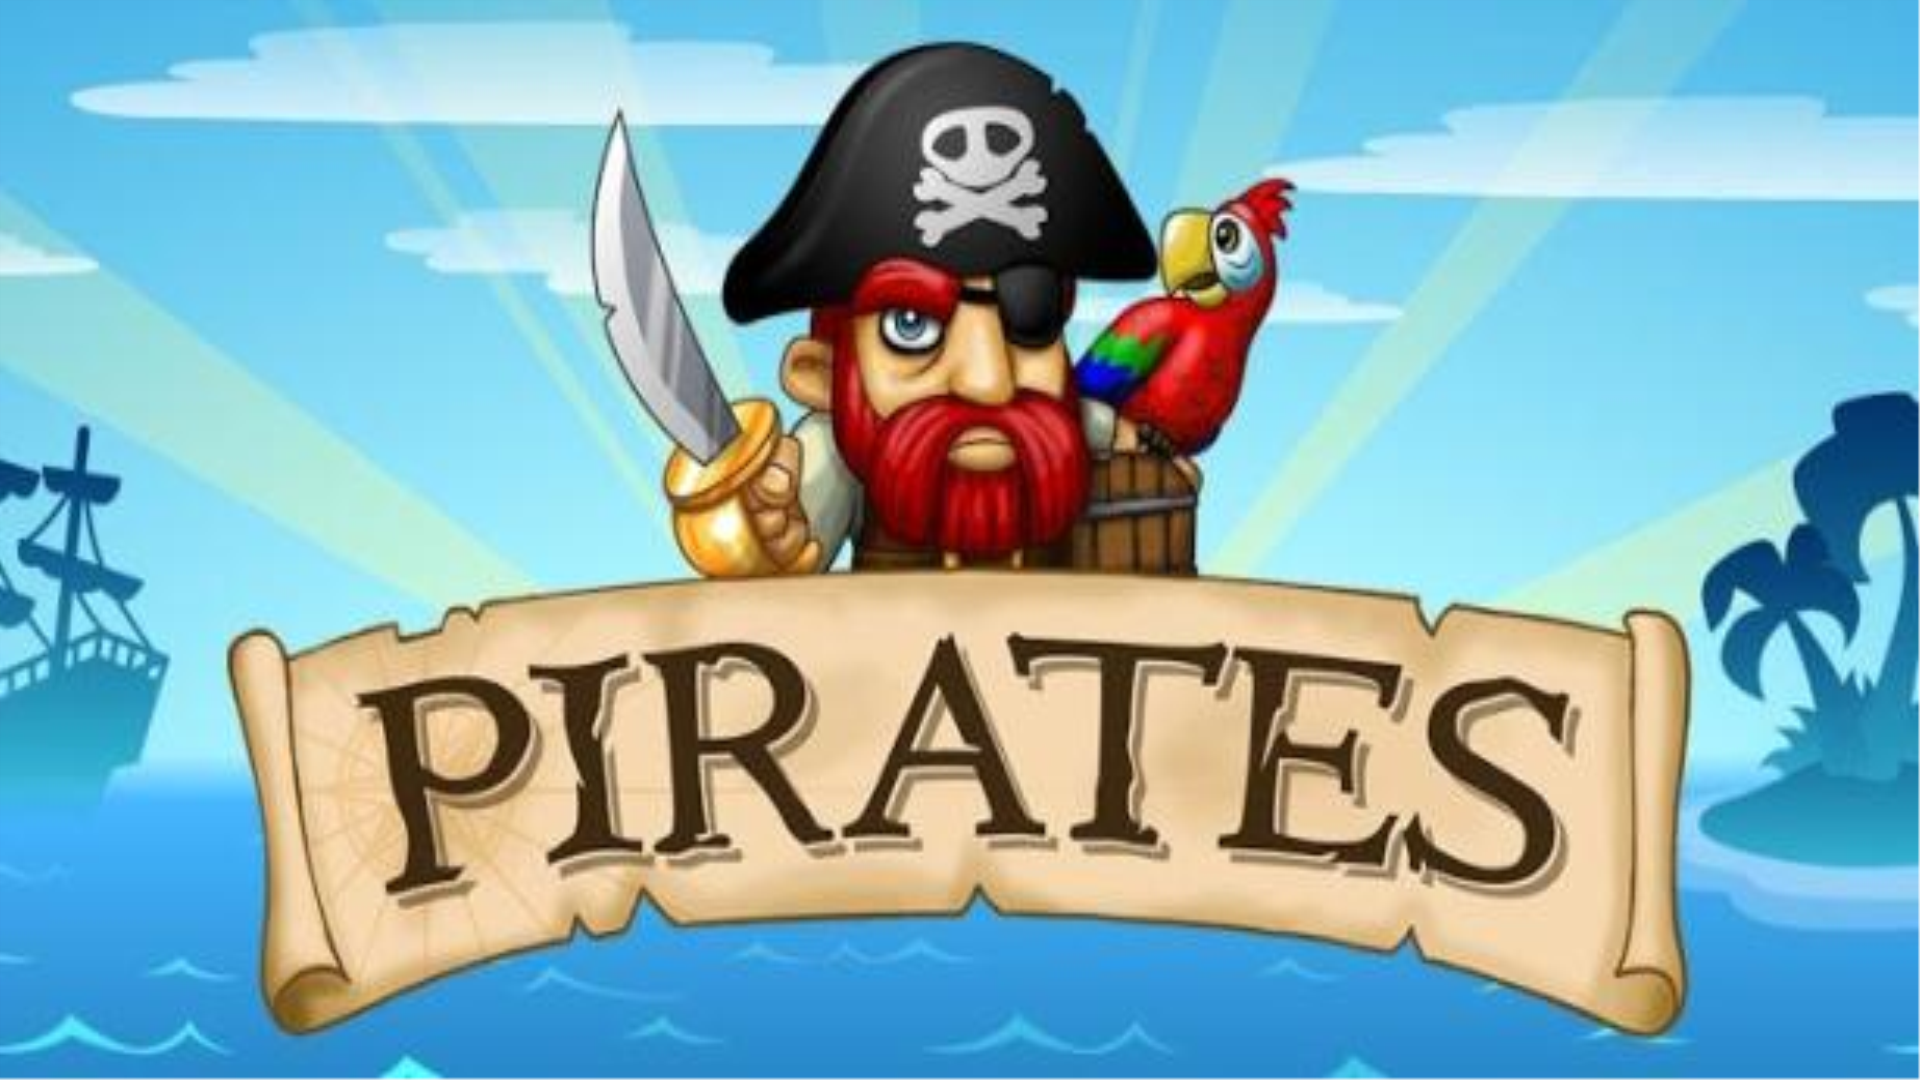 Pirates Pirates игра. Пираты на андроид. Пираты игра мобильная. Игра про пиратов на Android.